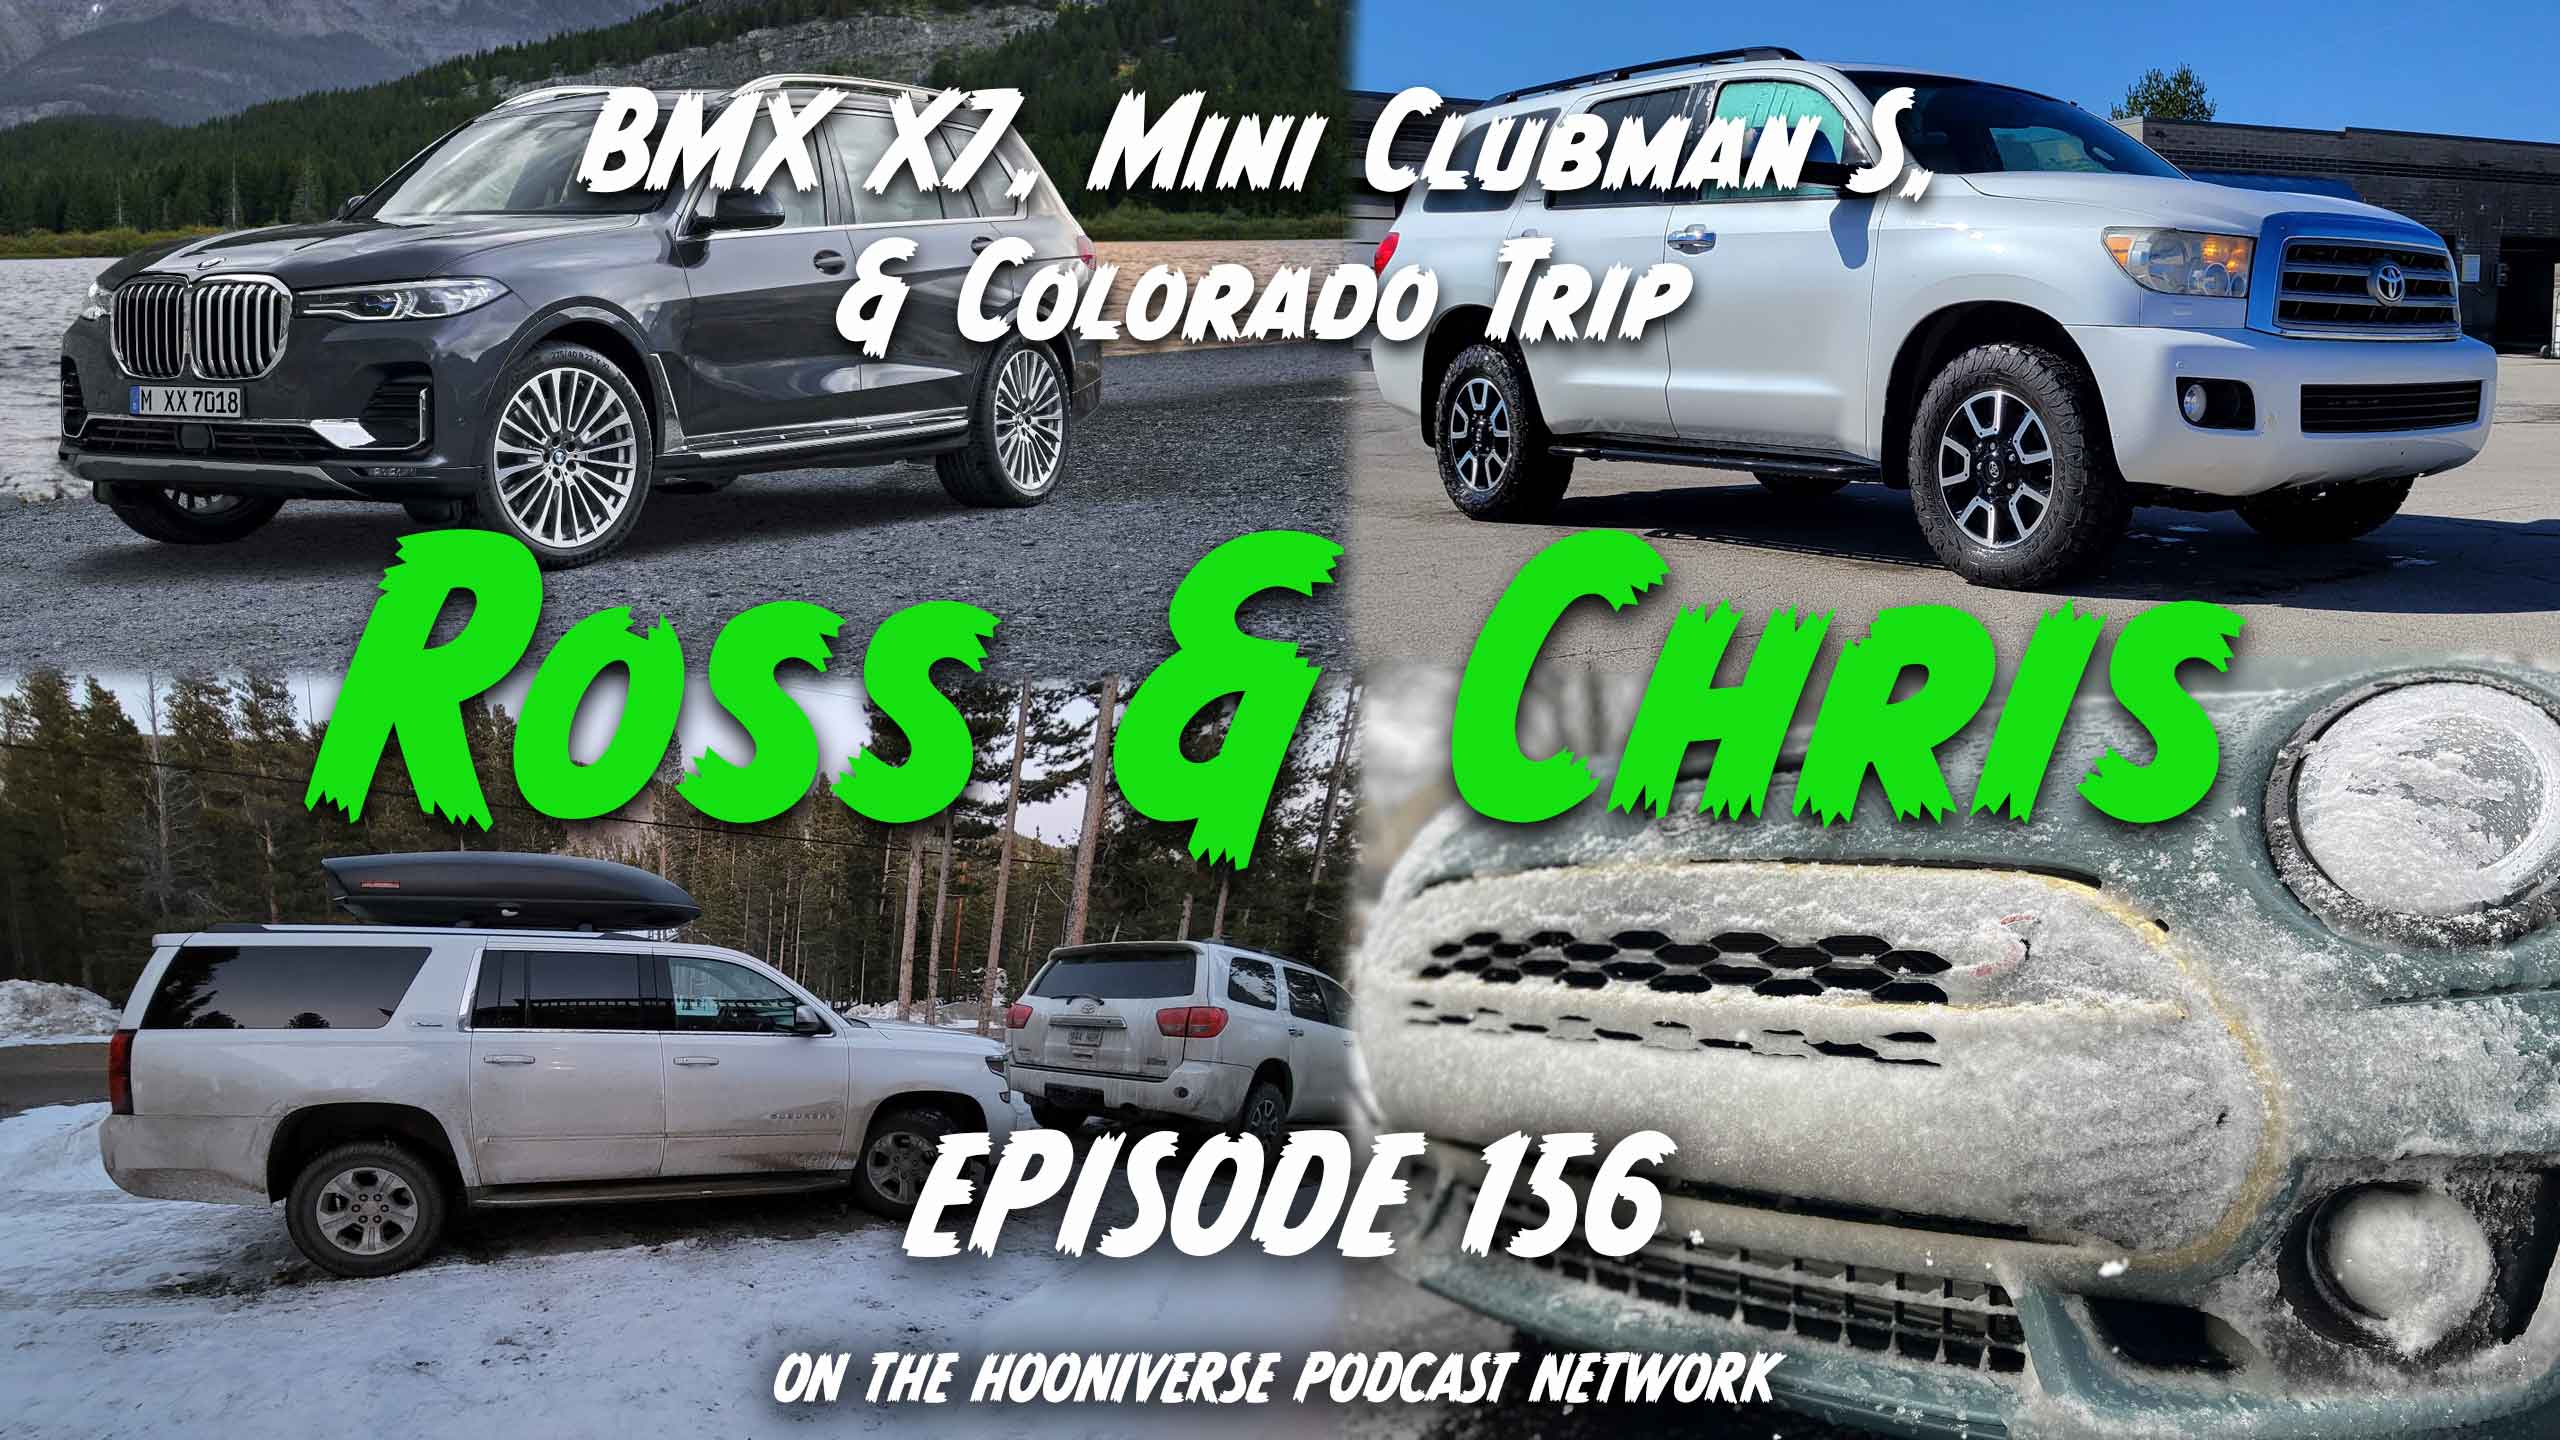 Chris-&-Ross-BMWX7-Mini-Clubman-S-Colorado-Trip-Off-The-Road-Again-Podcast-Episode-156